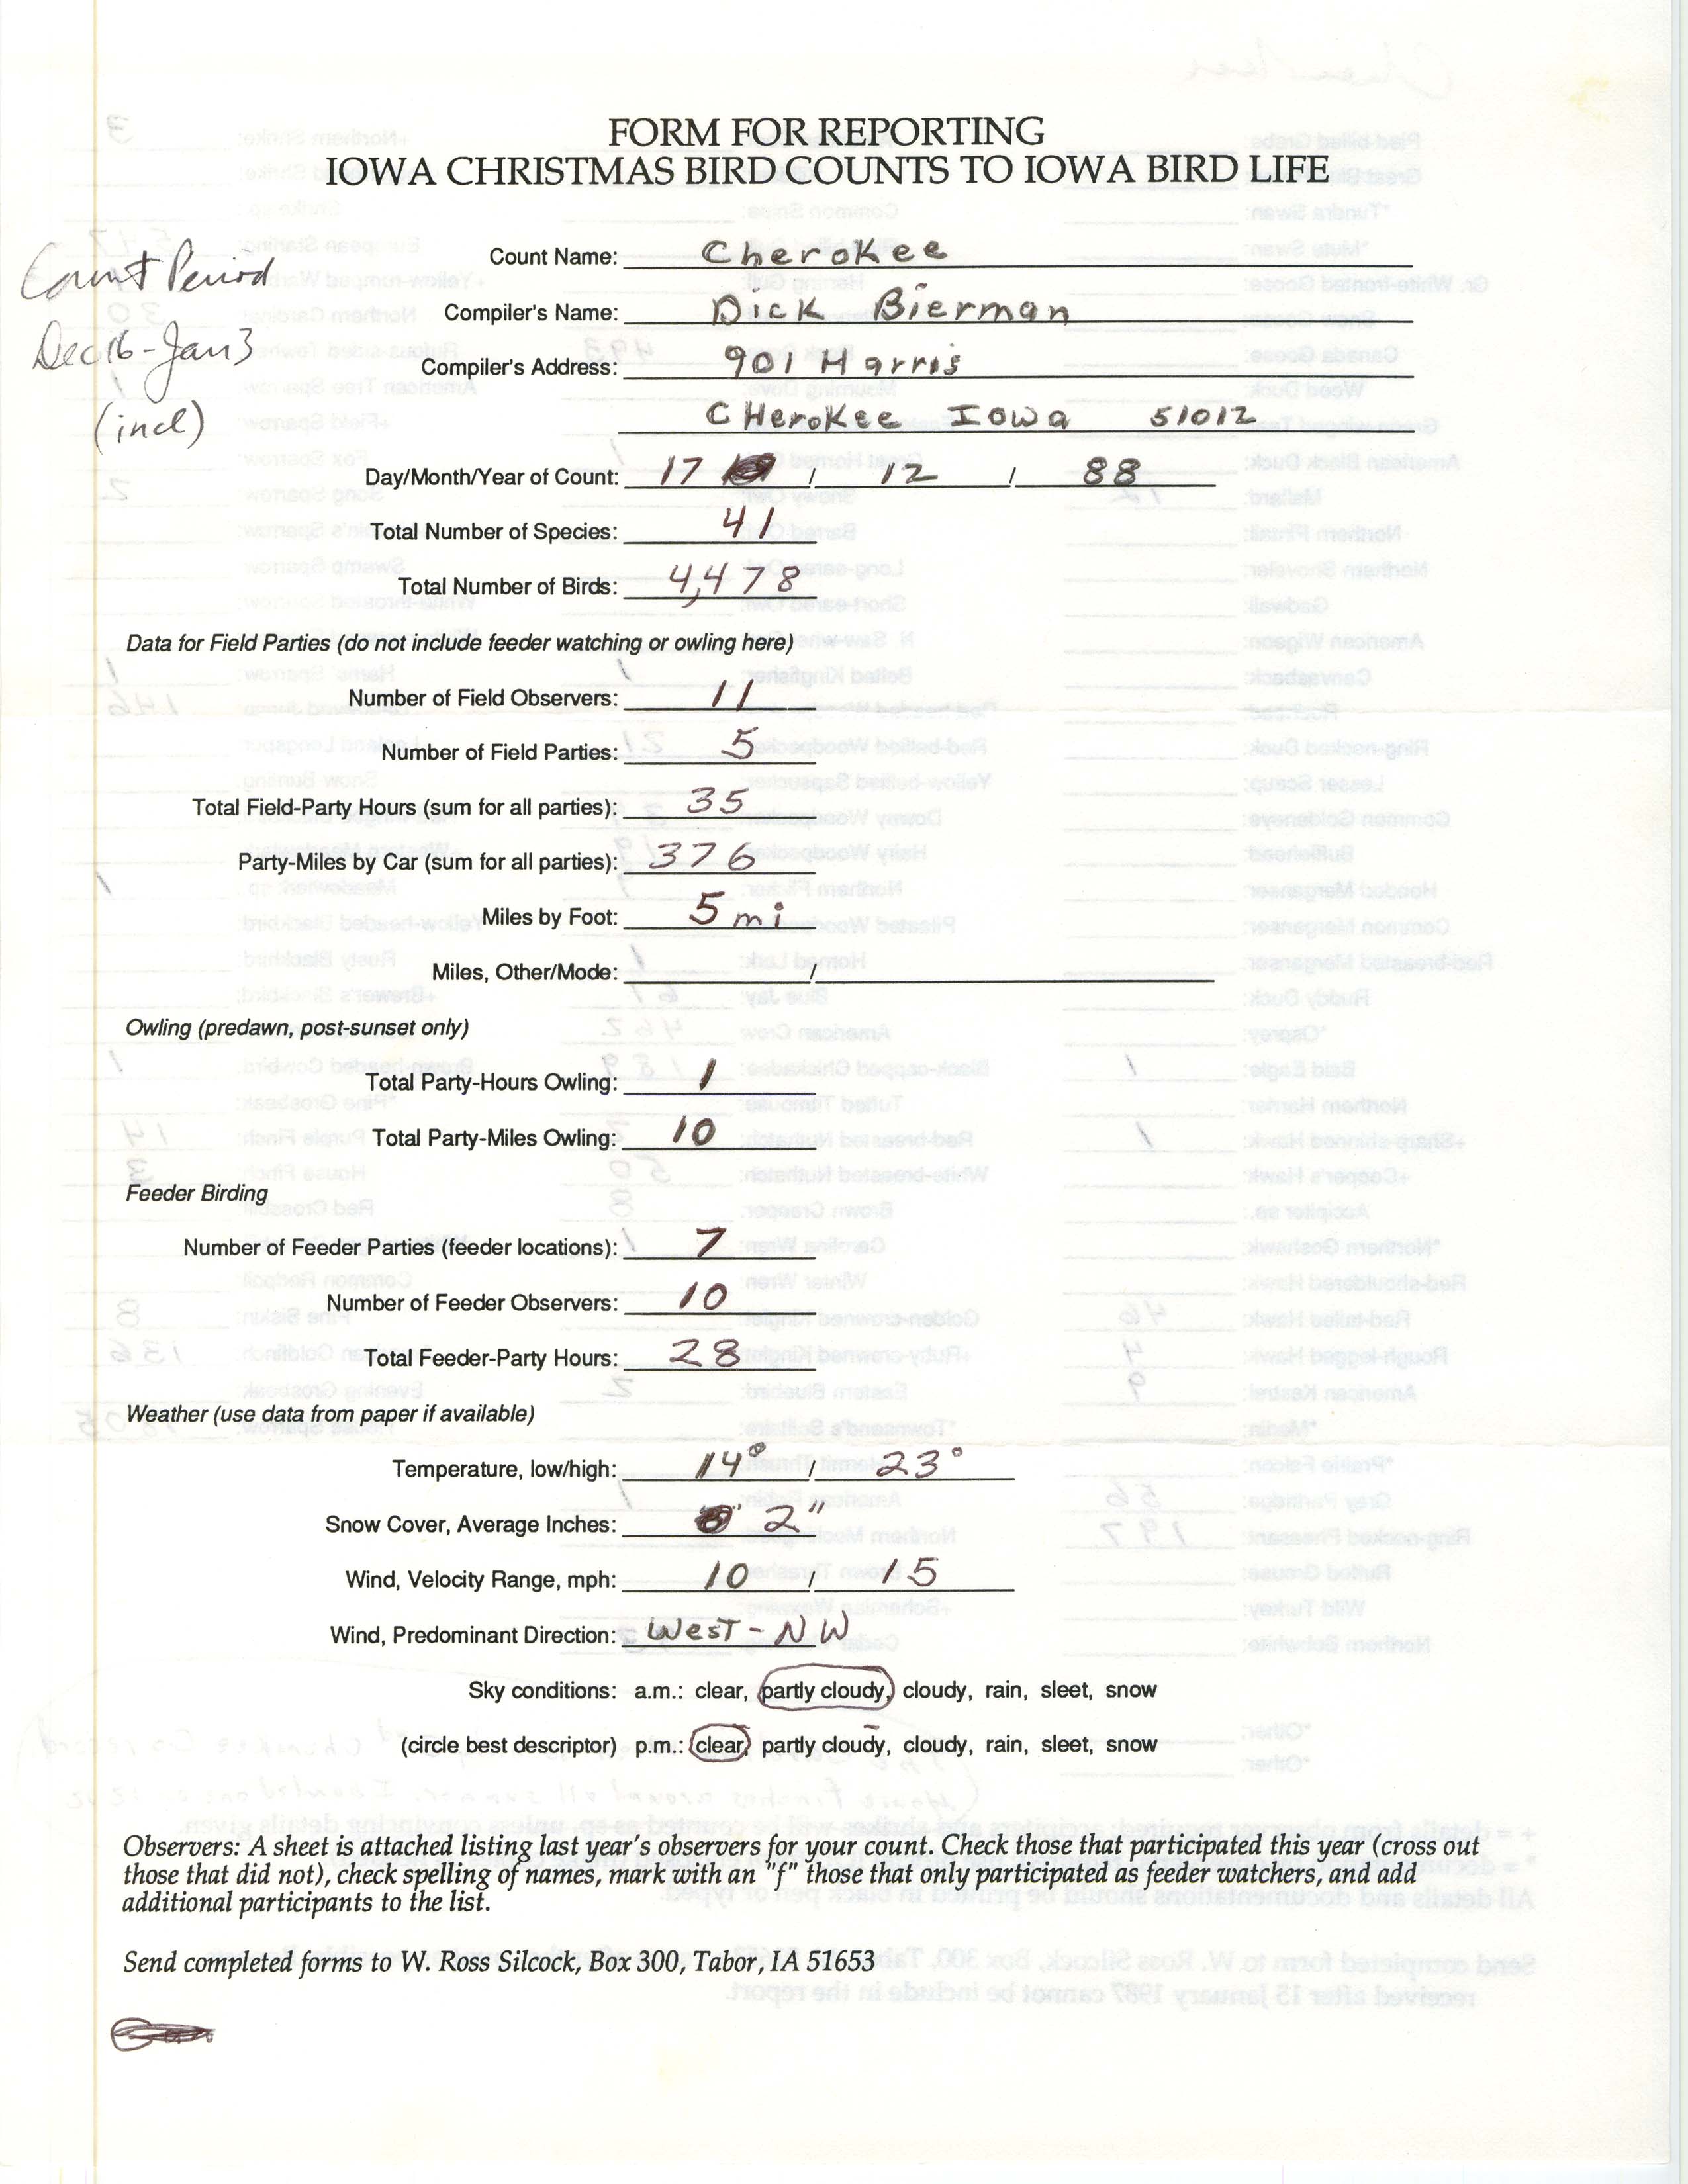 Form for reporting Iowa Christmas bird counts to Iowa Bird Life, Dick Bierman, December 17, 1988